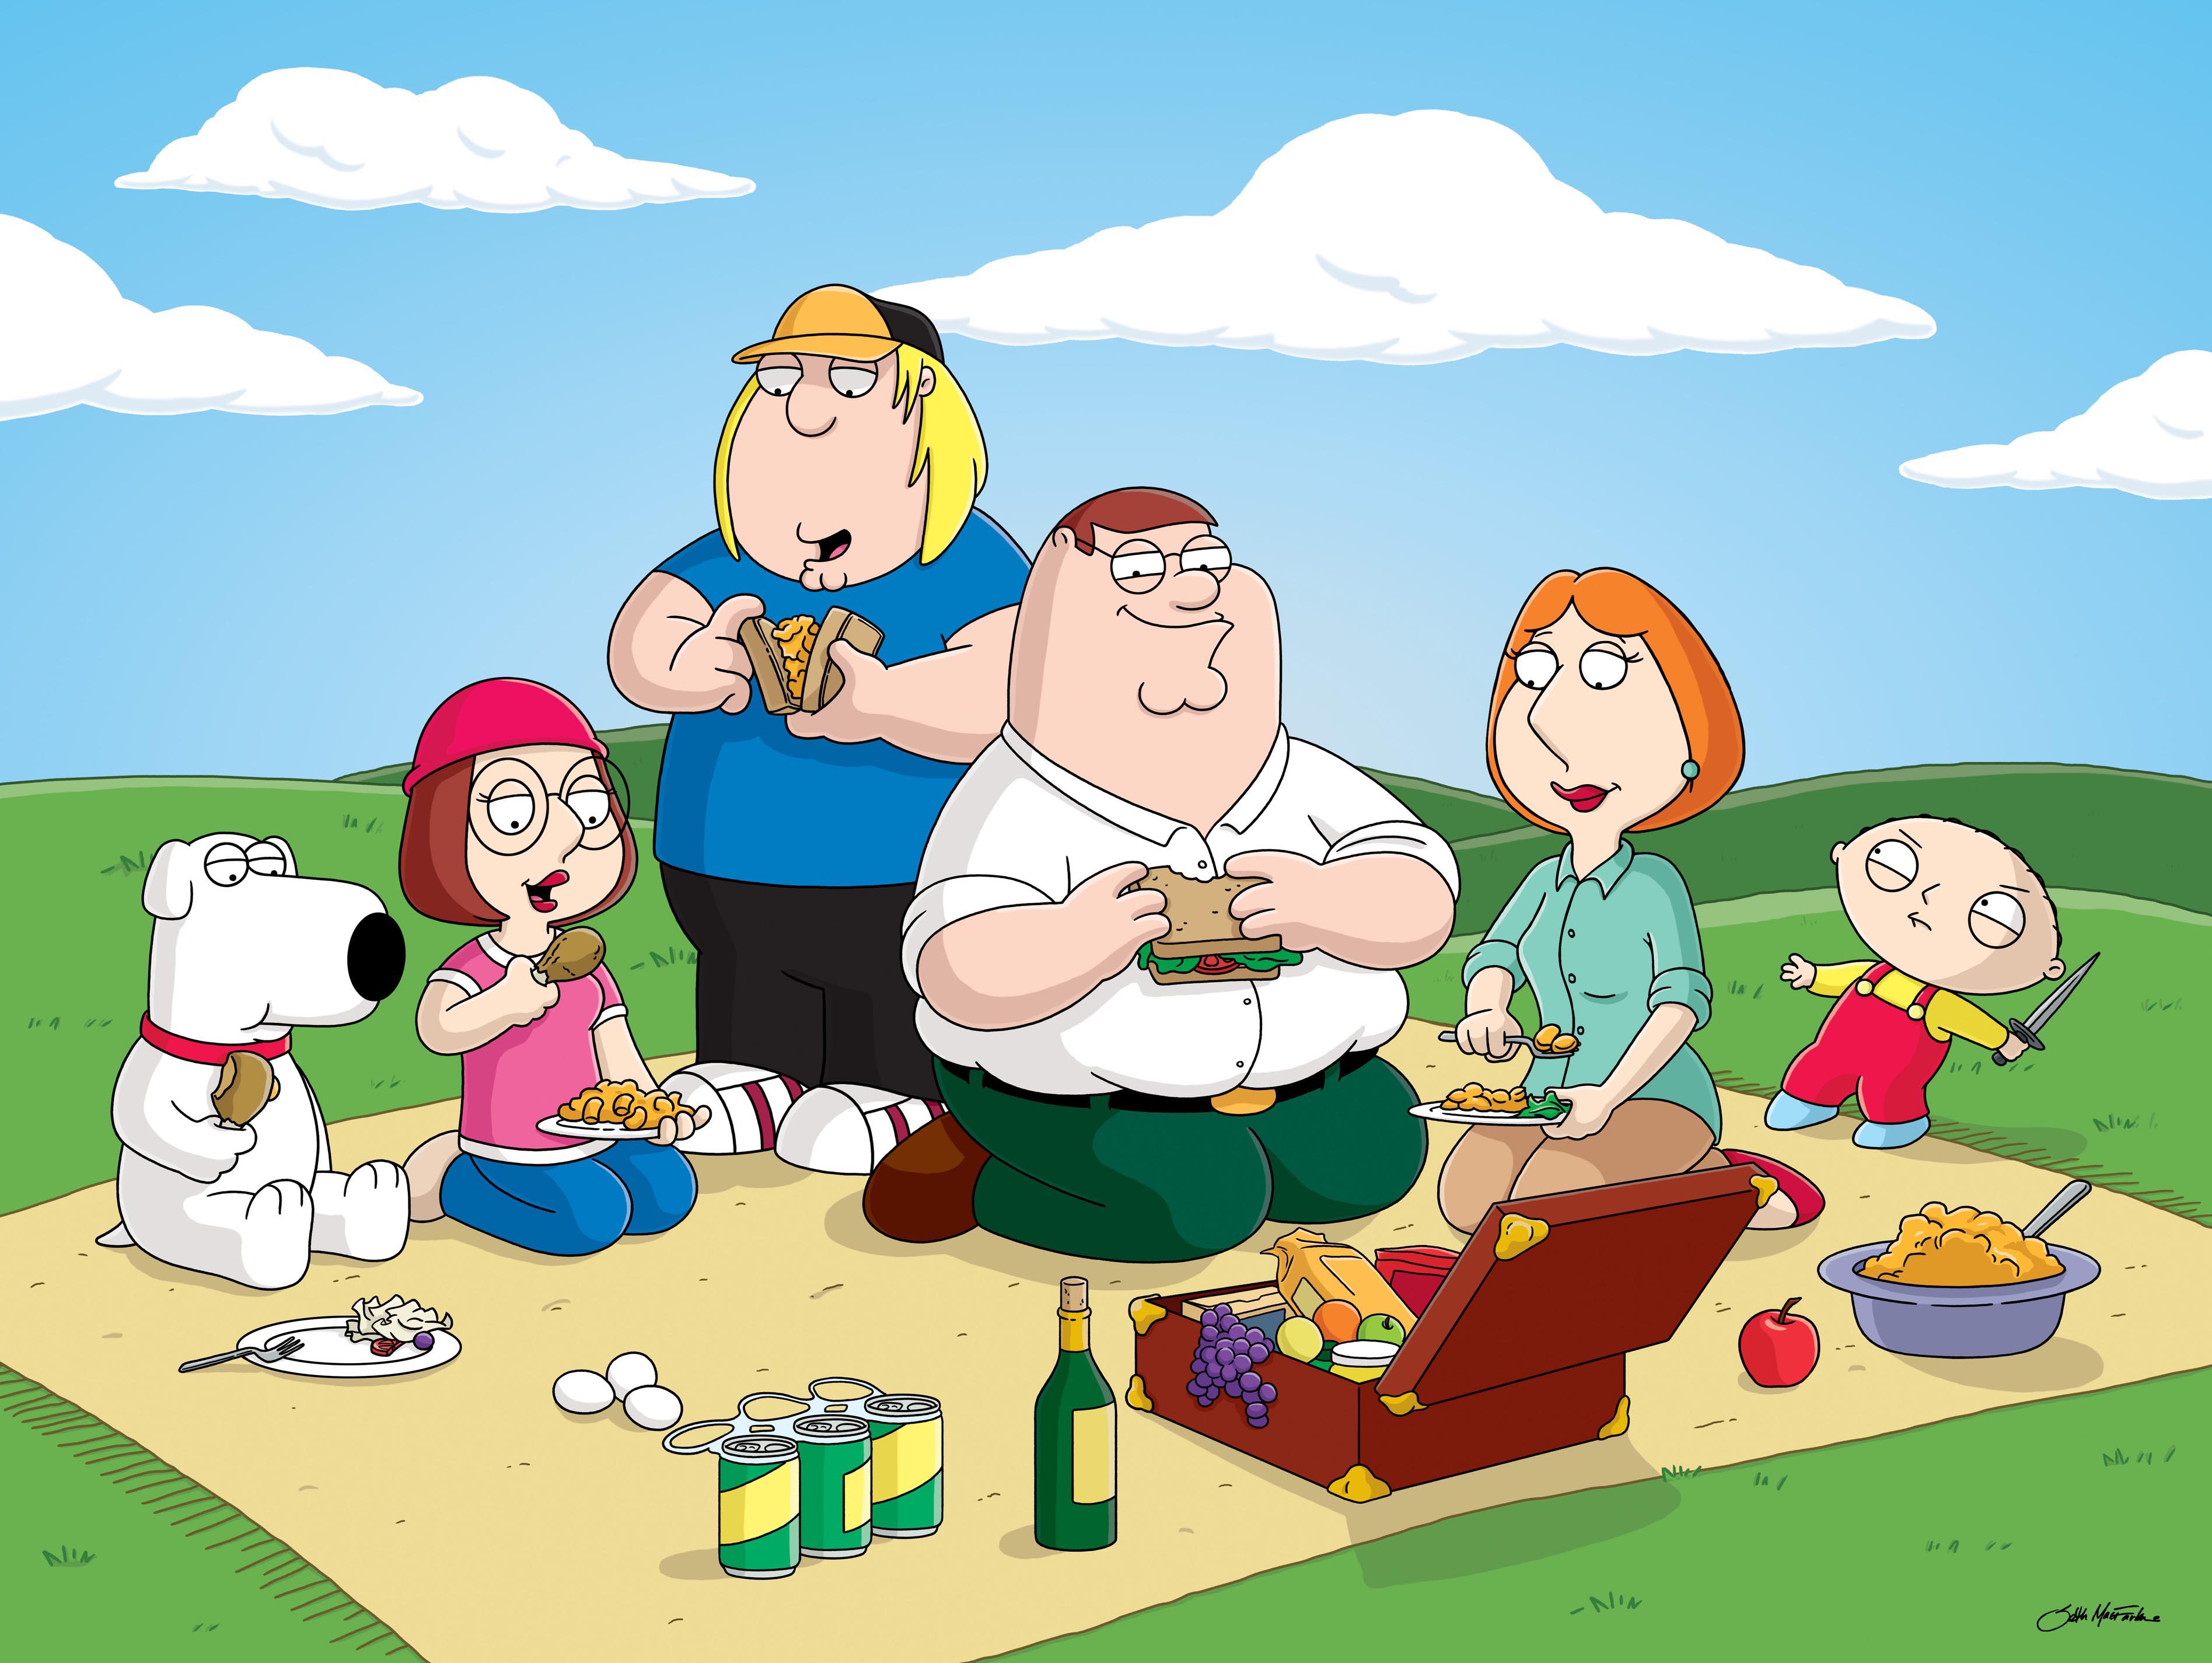 80's Guy, Family Guy Fanon Wiki